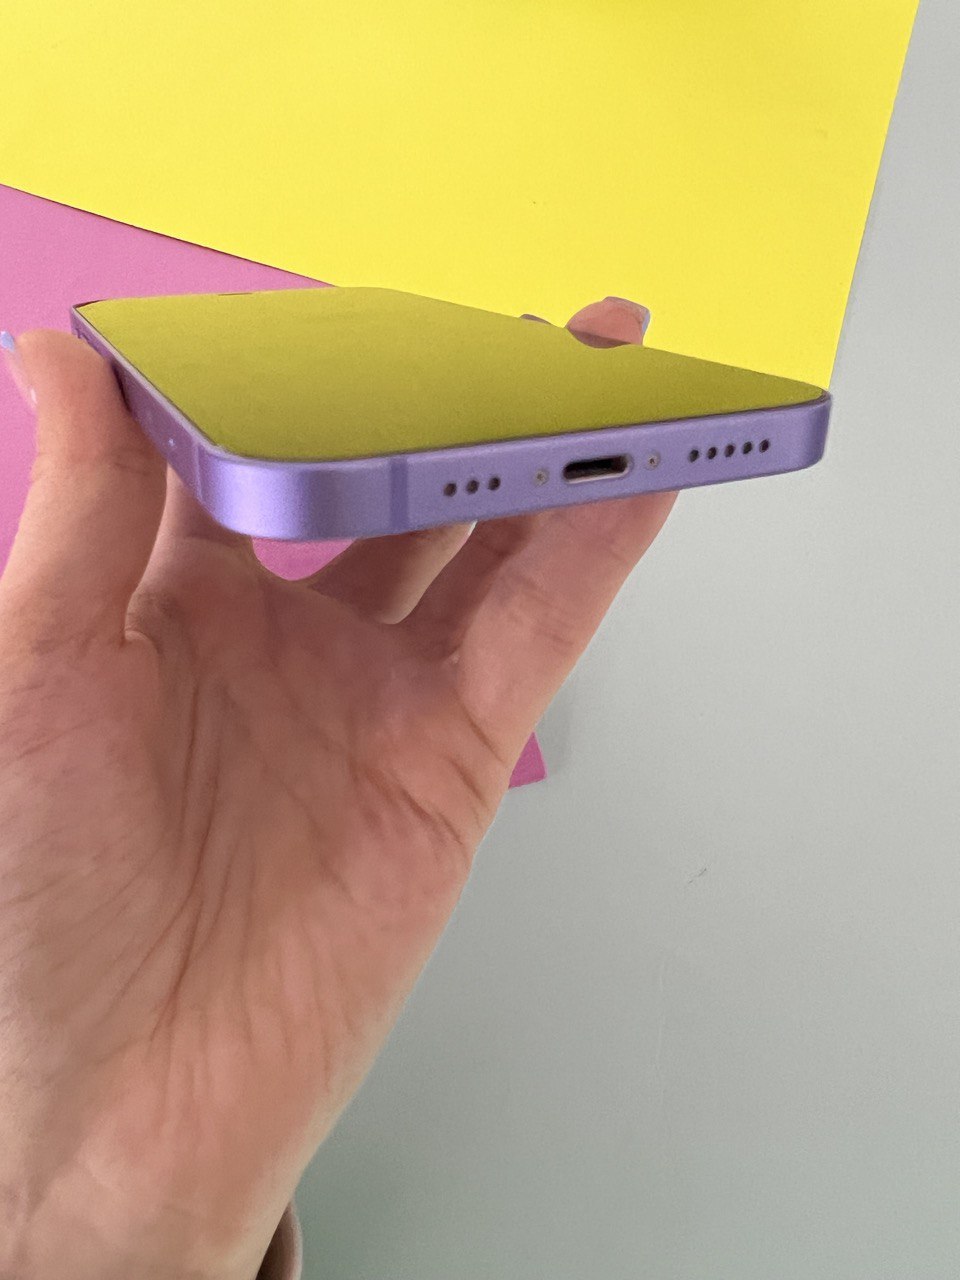 Apple iPhone 12 128gb Purple